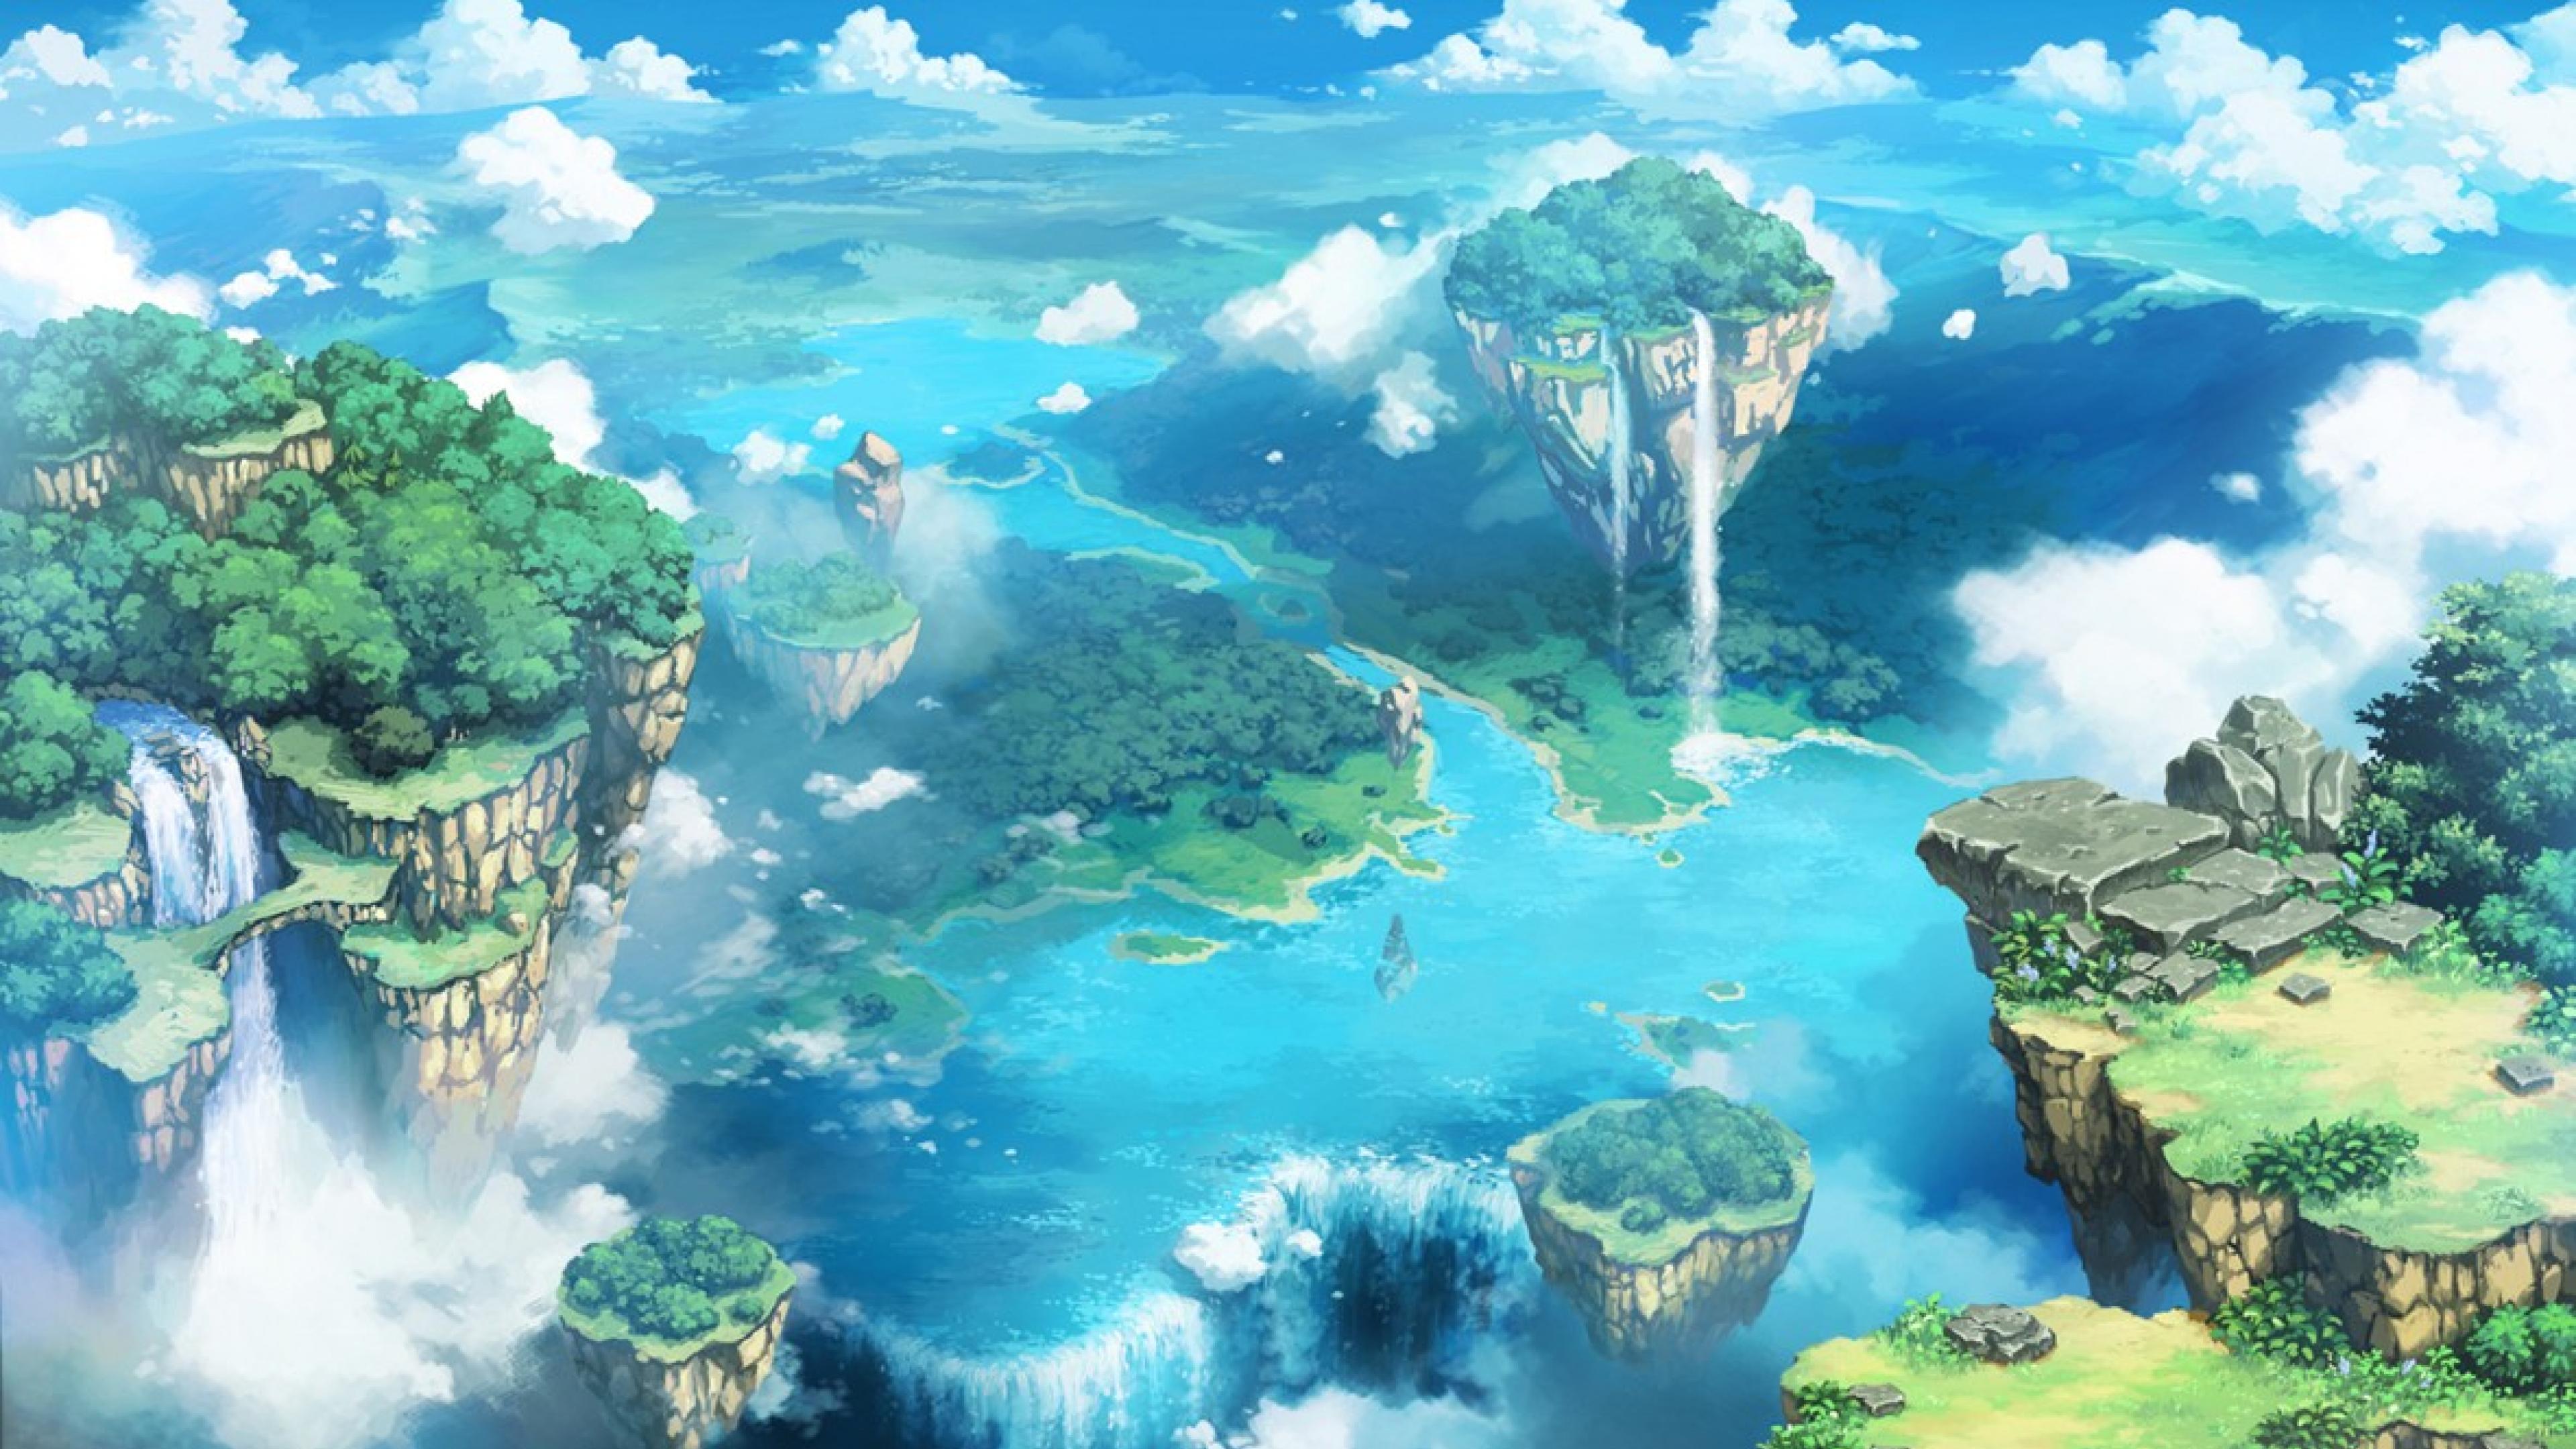 O351nc9 Dreamscape Wallpaper Px Anime Floating Islands 3840x2160 Wallpaper Teahub Io